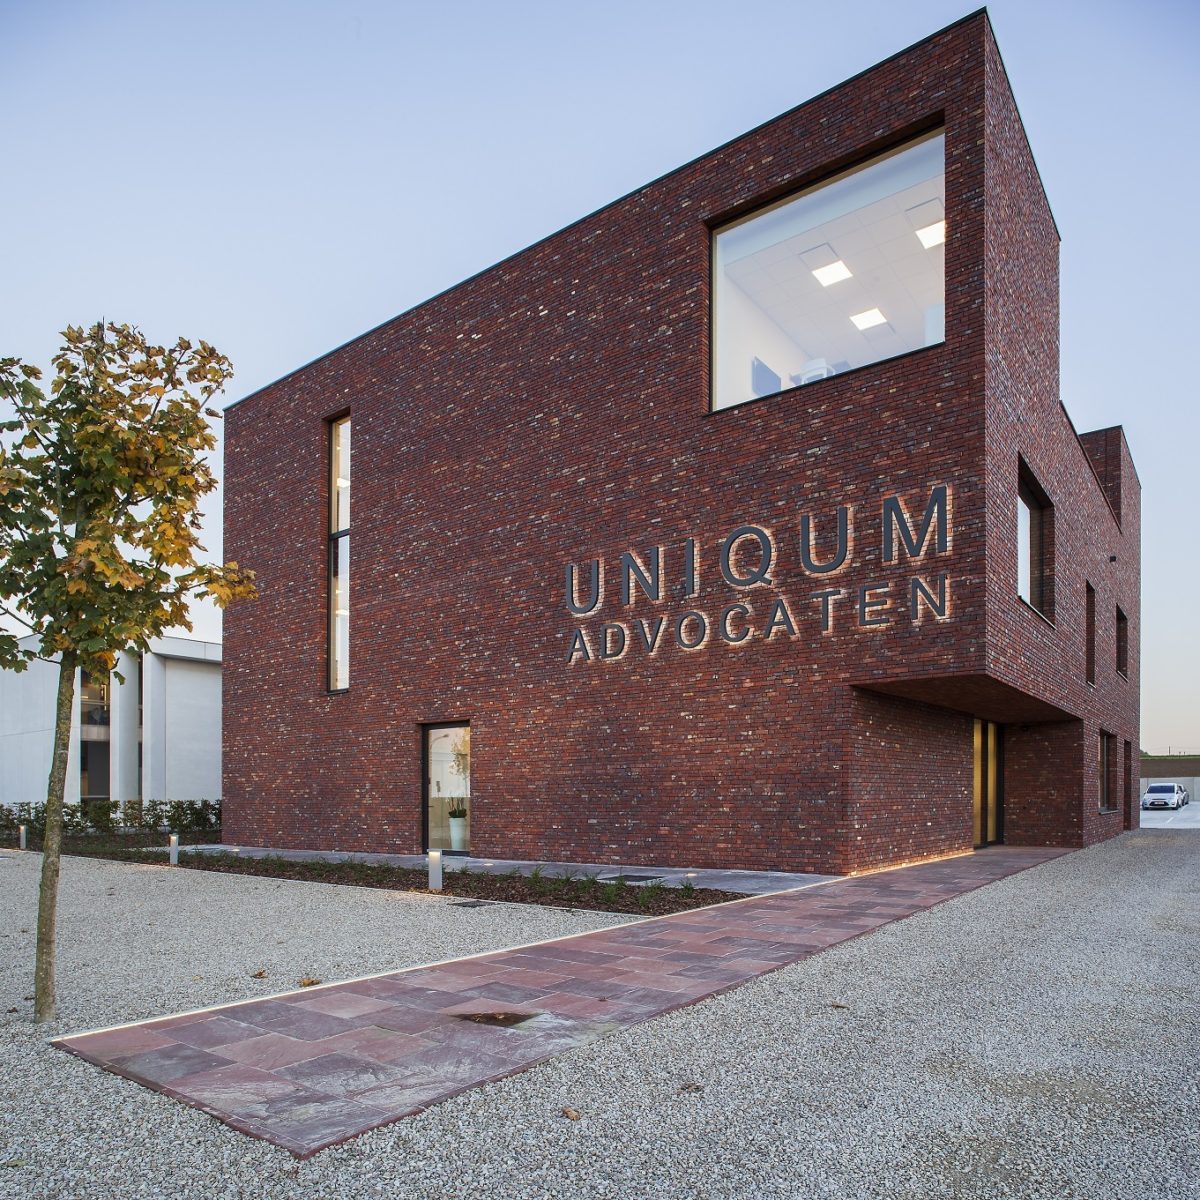 Uniqum Advocaten - Kortrijk - c-Annick Vernimmen - 0508 - F-5x5-xx